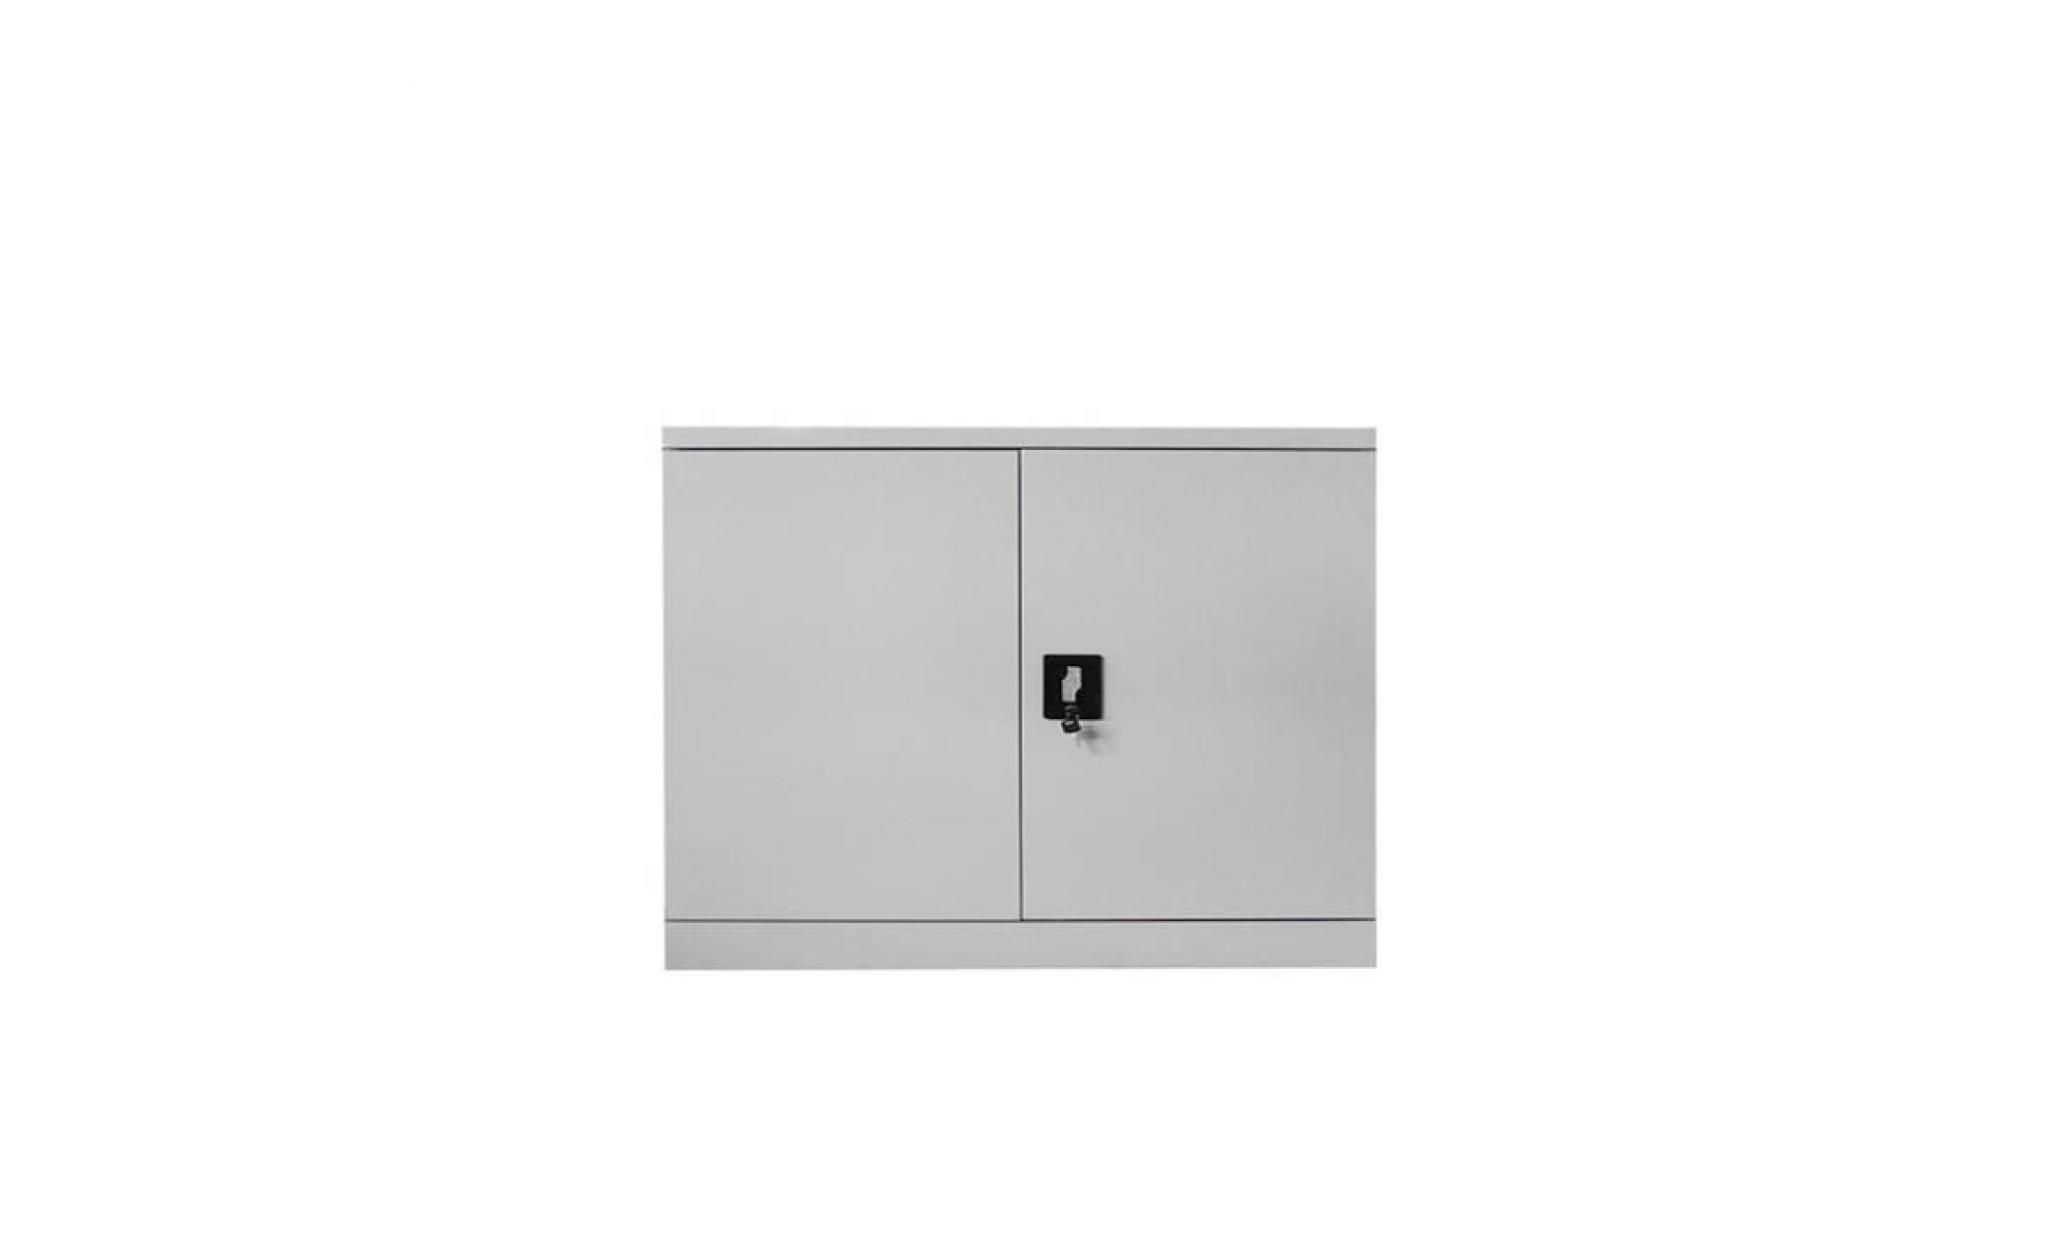 mmt steel metal office storage 2 door bookcase filing cabinet, desk height extension   73cm tall, grey pas cher